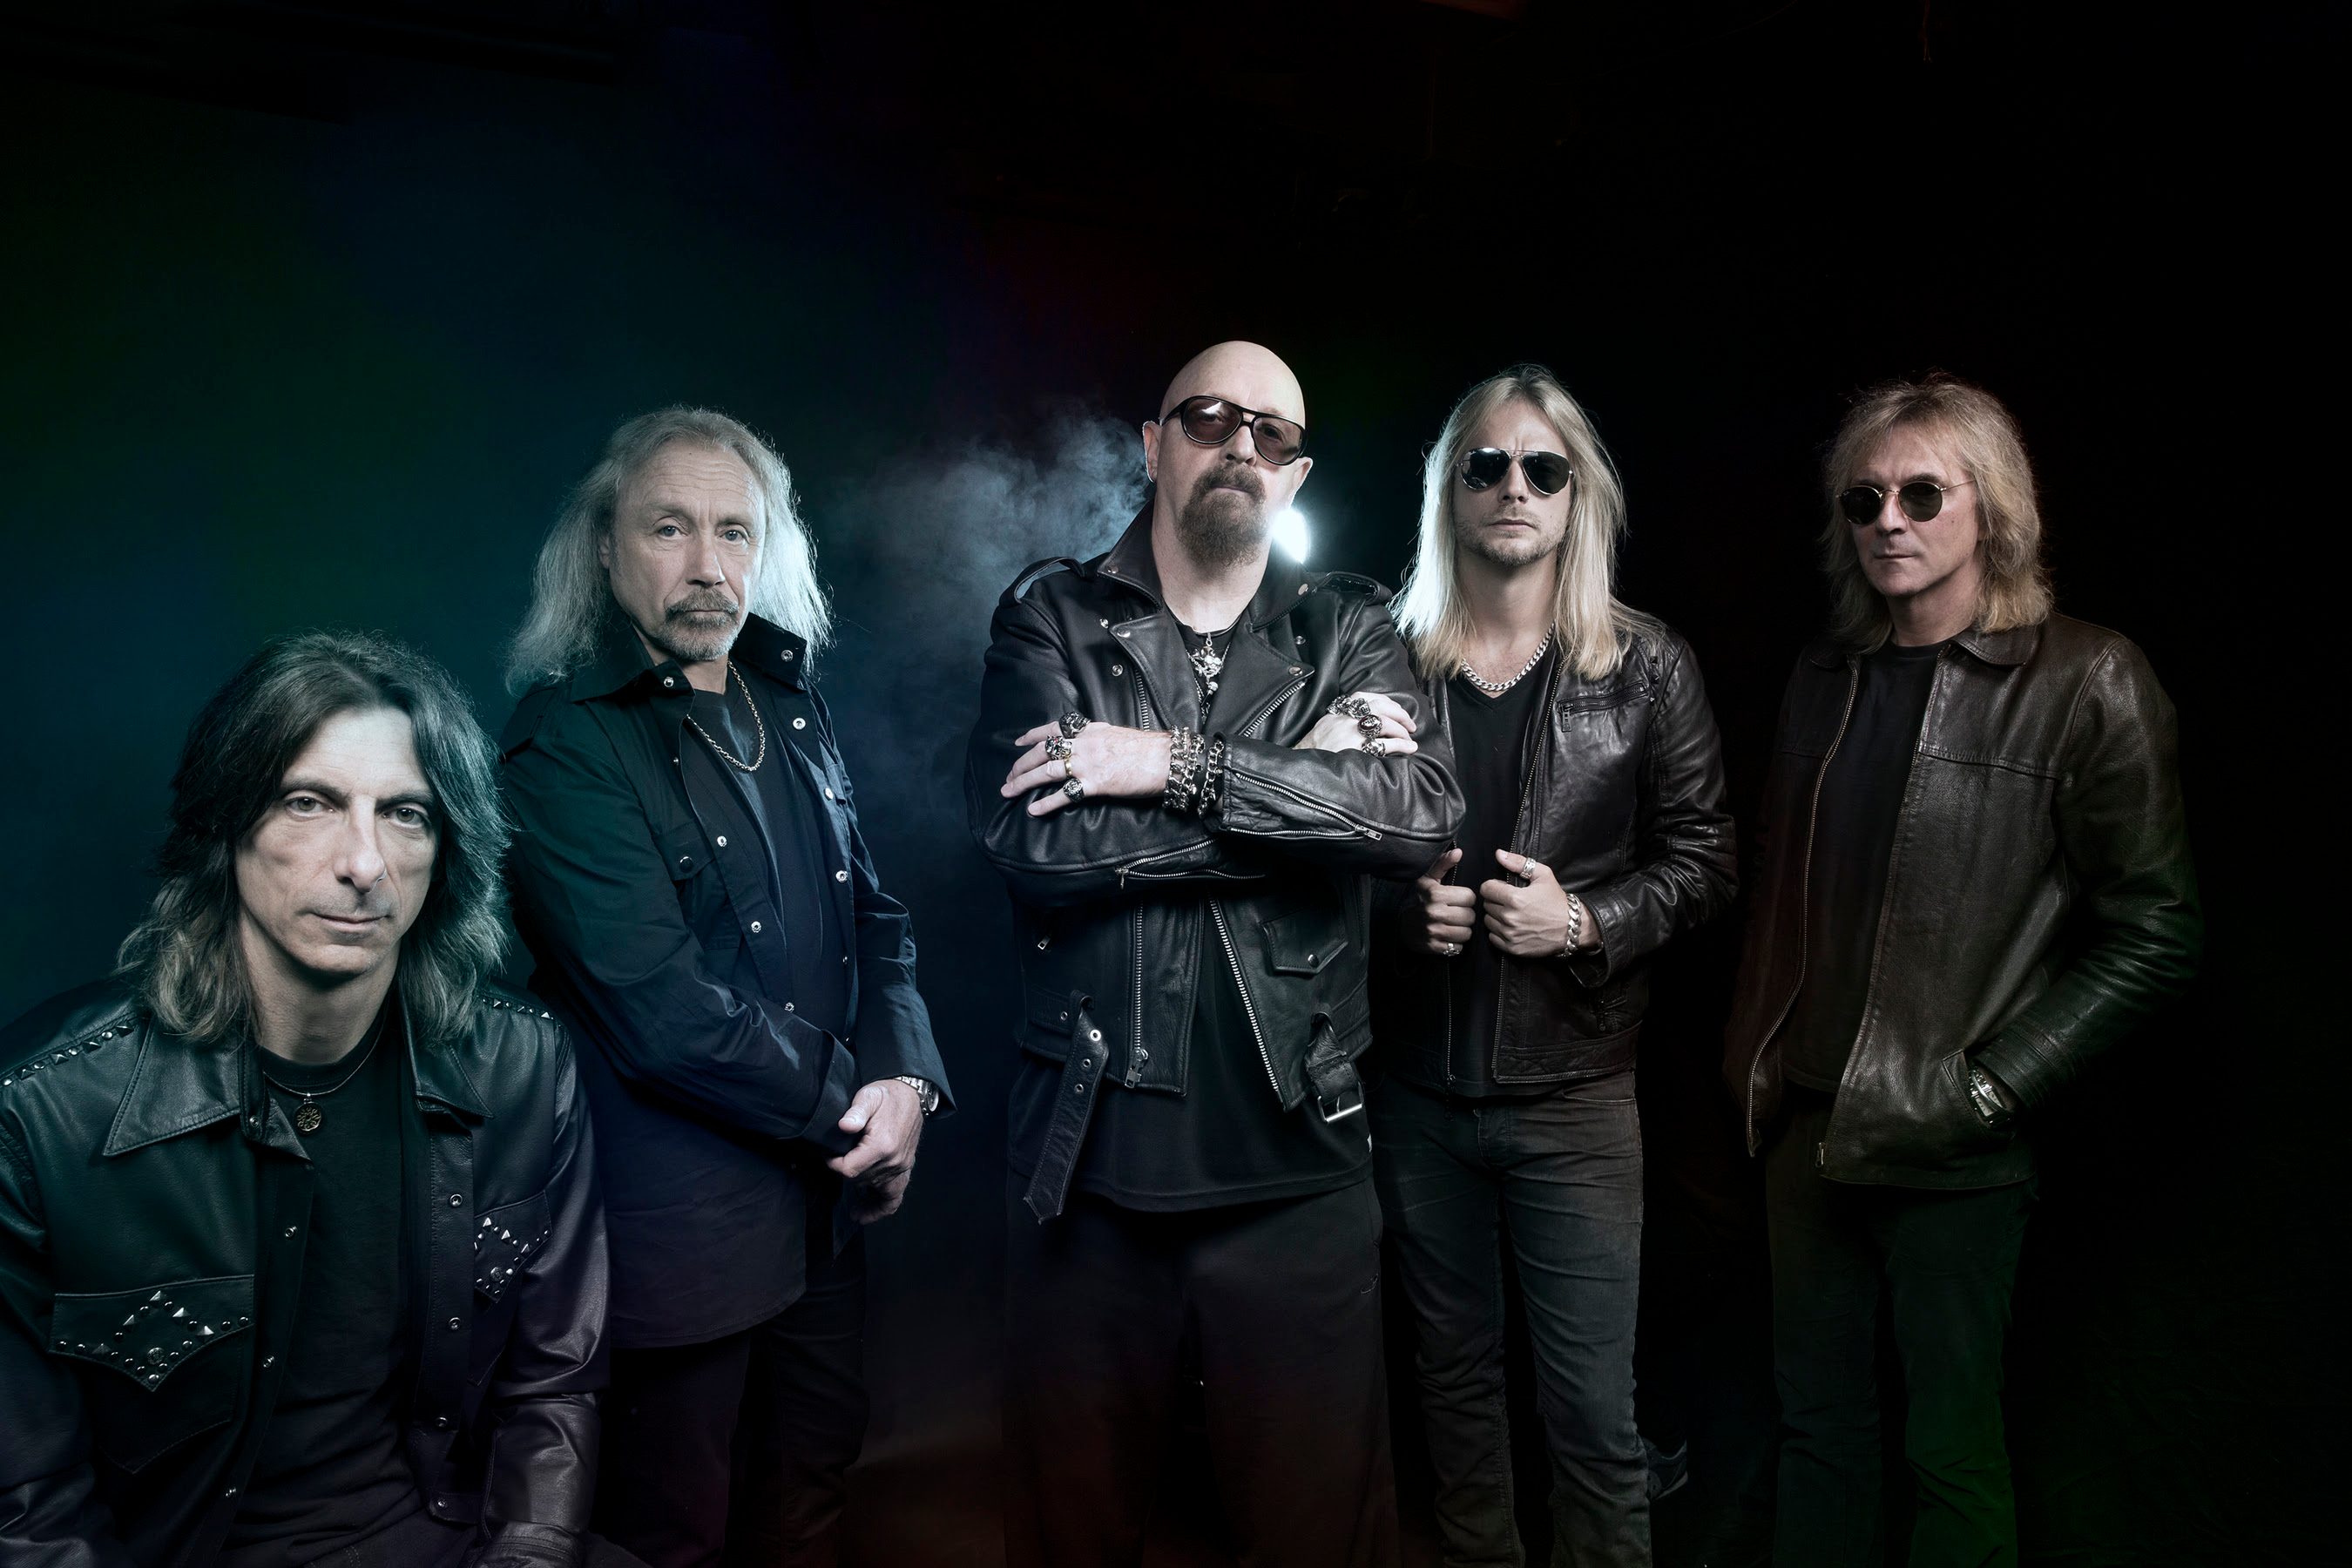 Fans React to K.K. Downing + Judas Priest Reuniting at Rock Hall